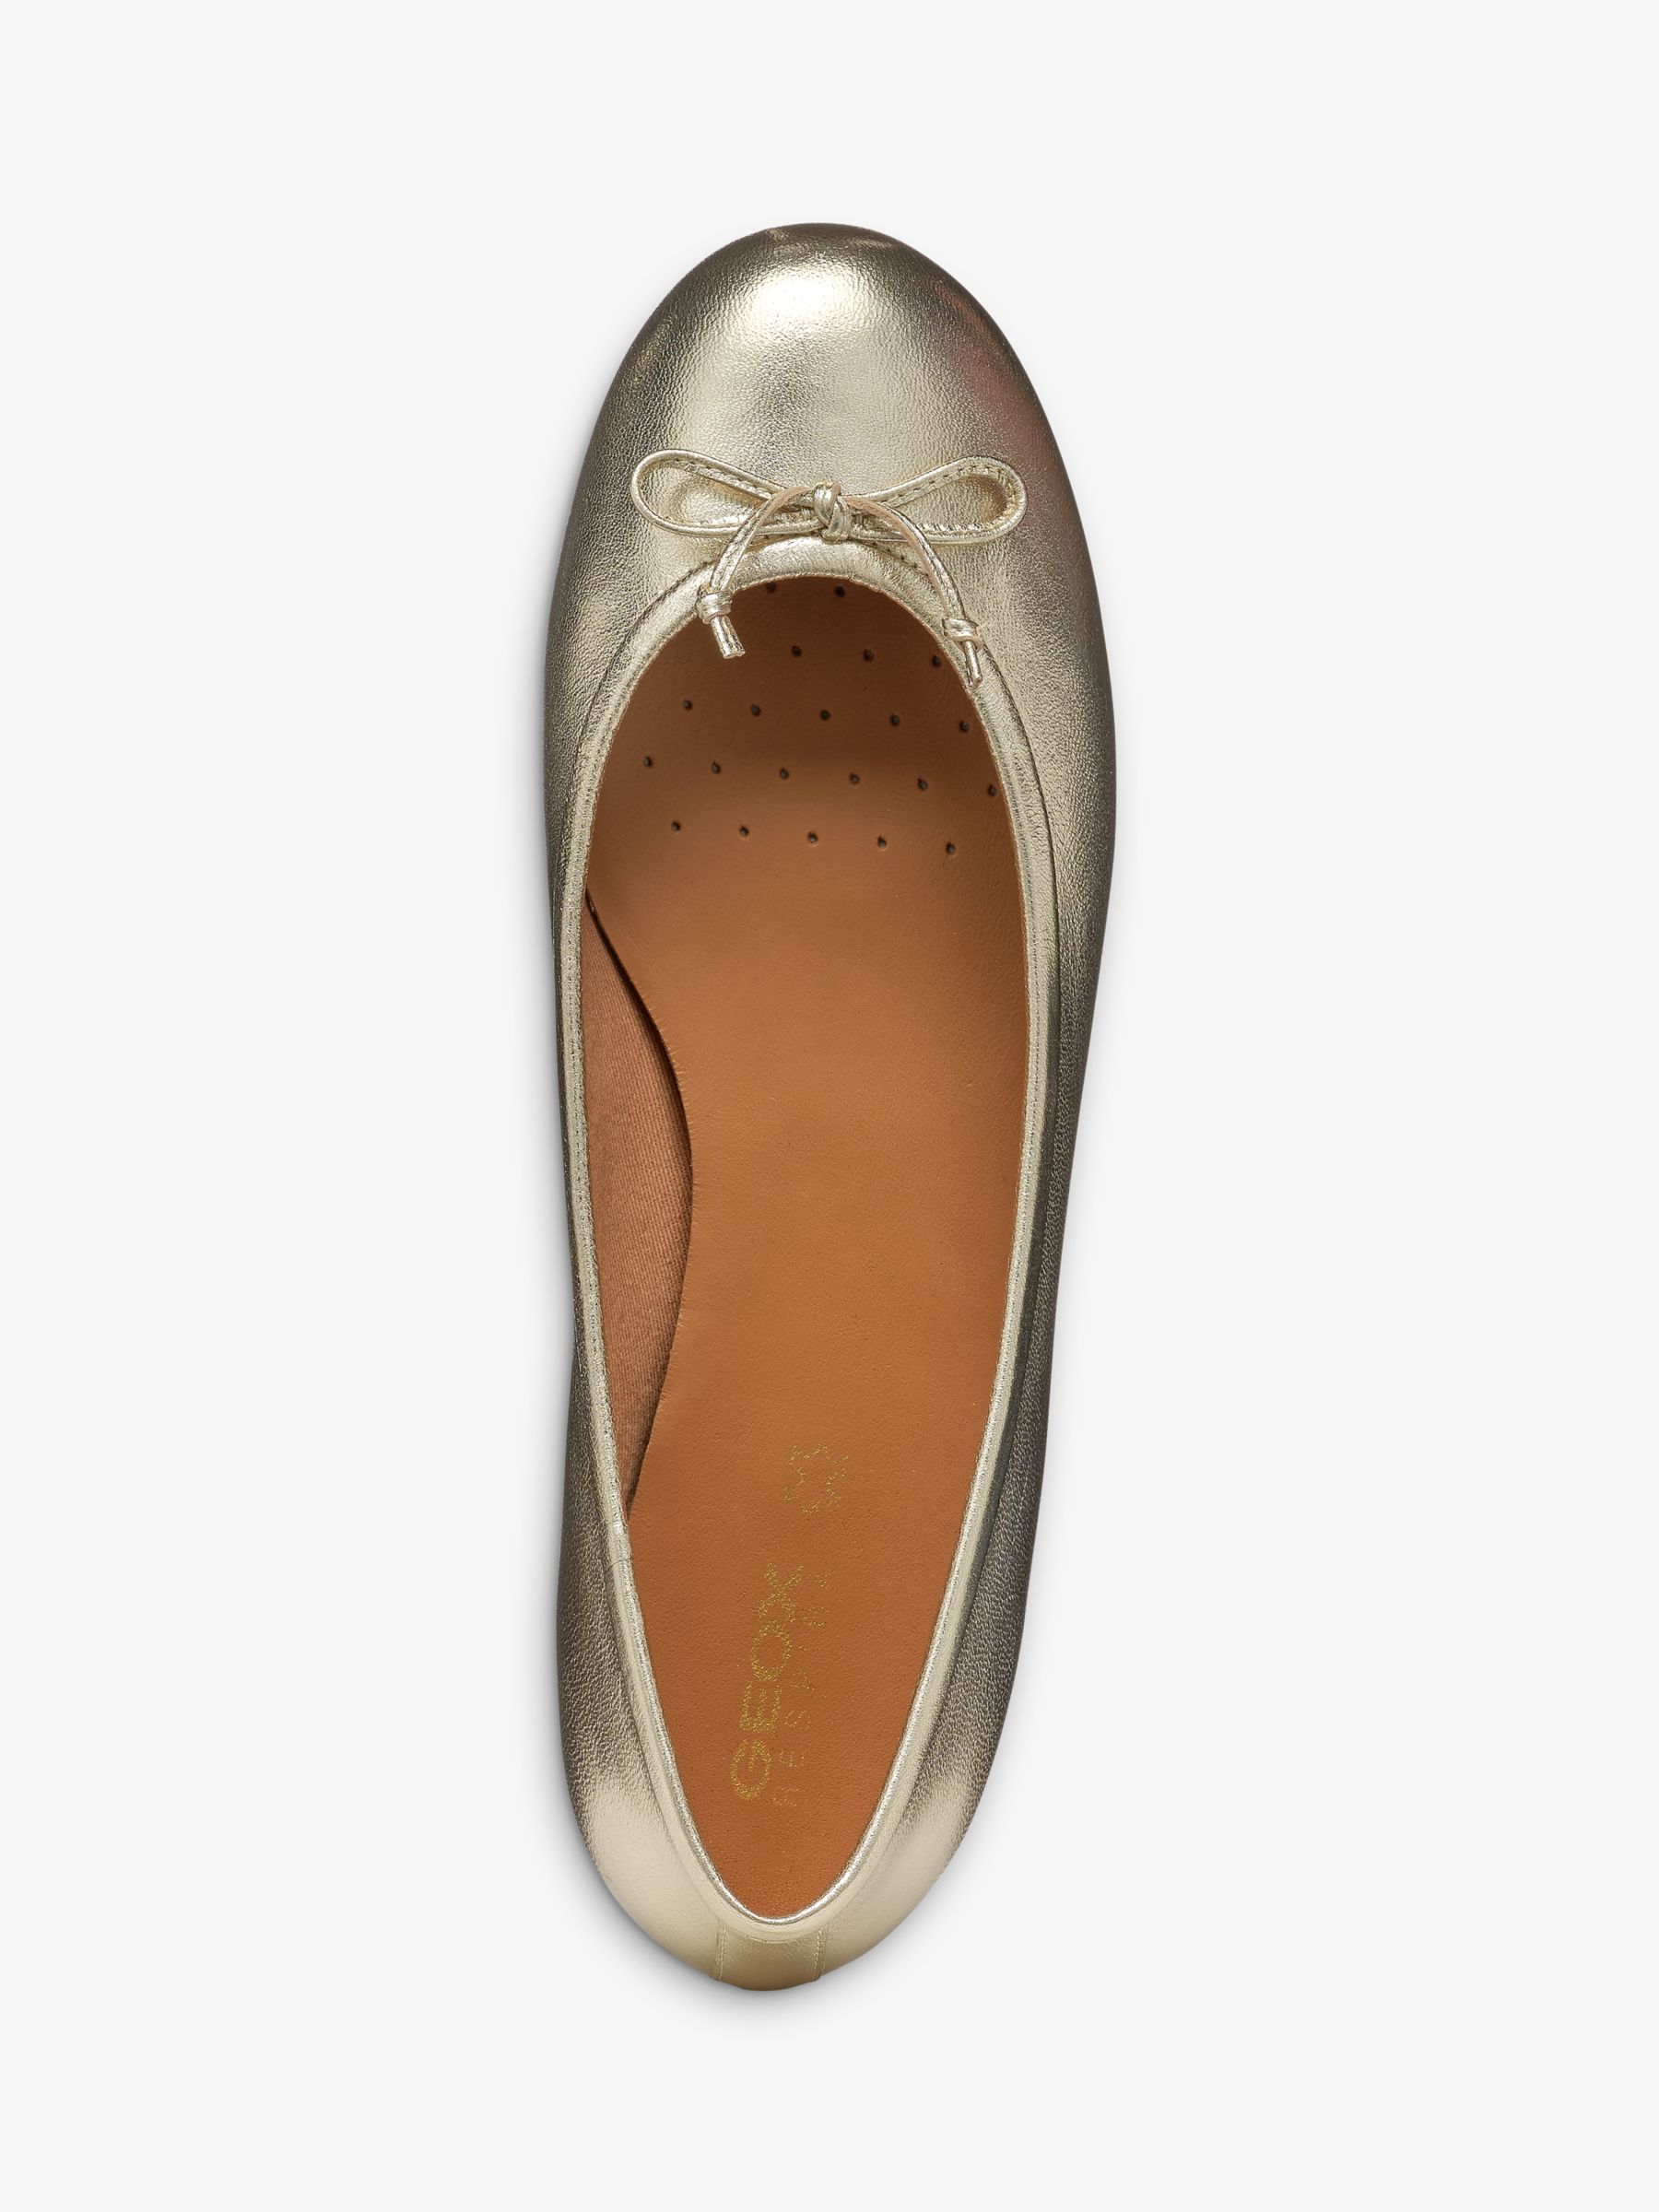 Geox Palmaria Leather Ballerina Shoes, Gold, EU40